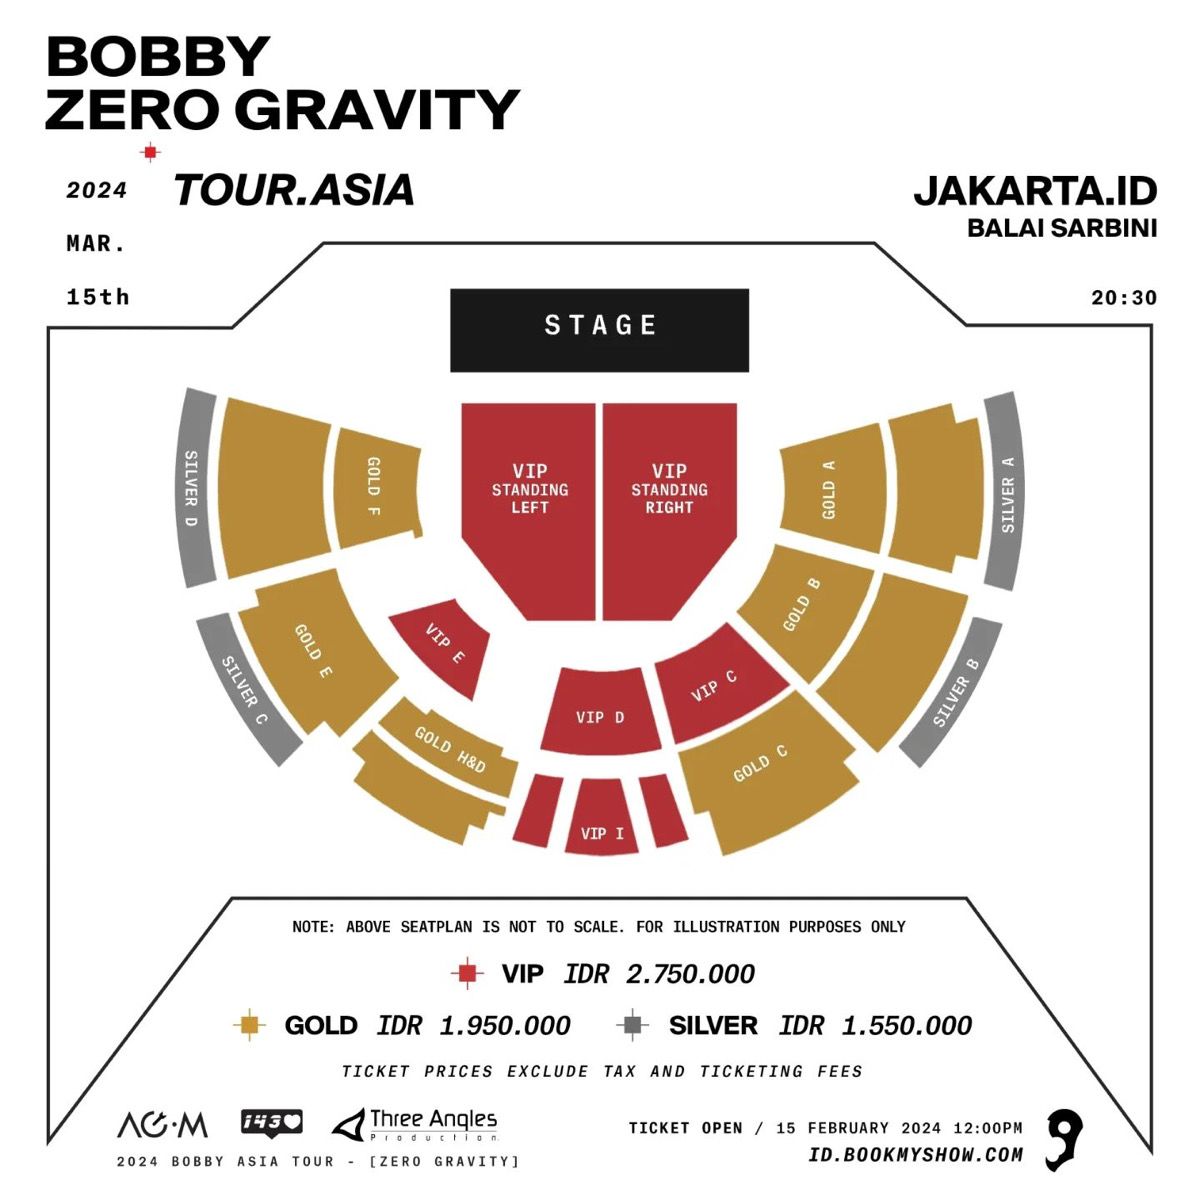 Inilah detail seat plan dan harga tiket konser solo BOBBY iKON di Jakarta